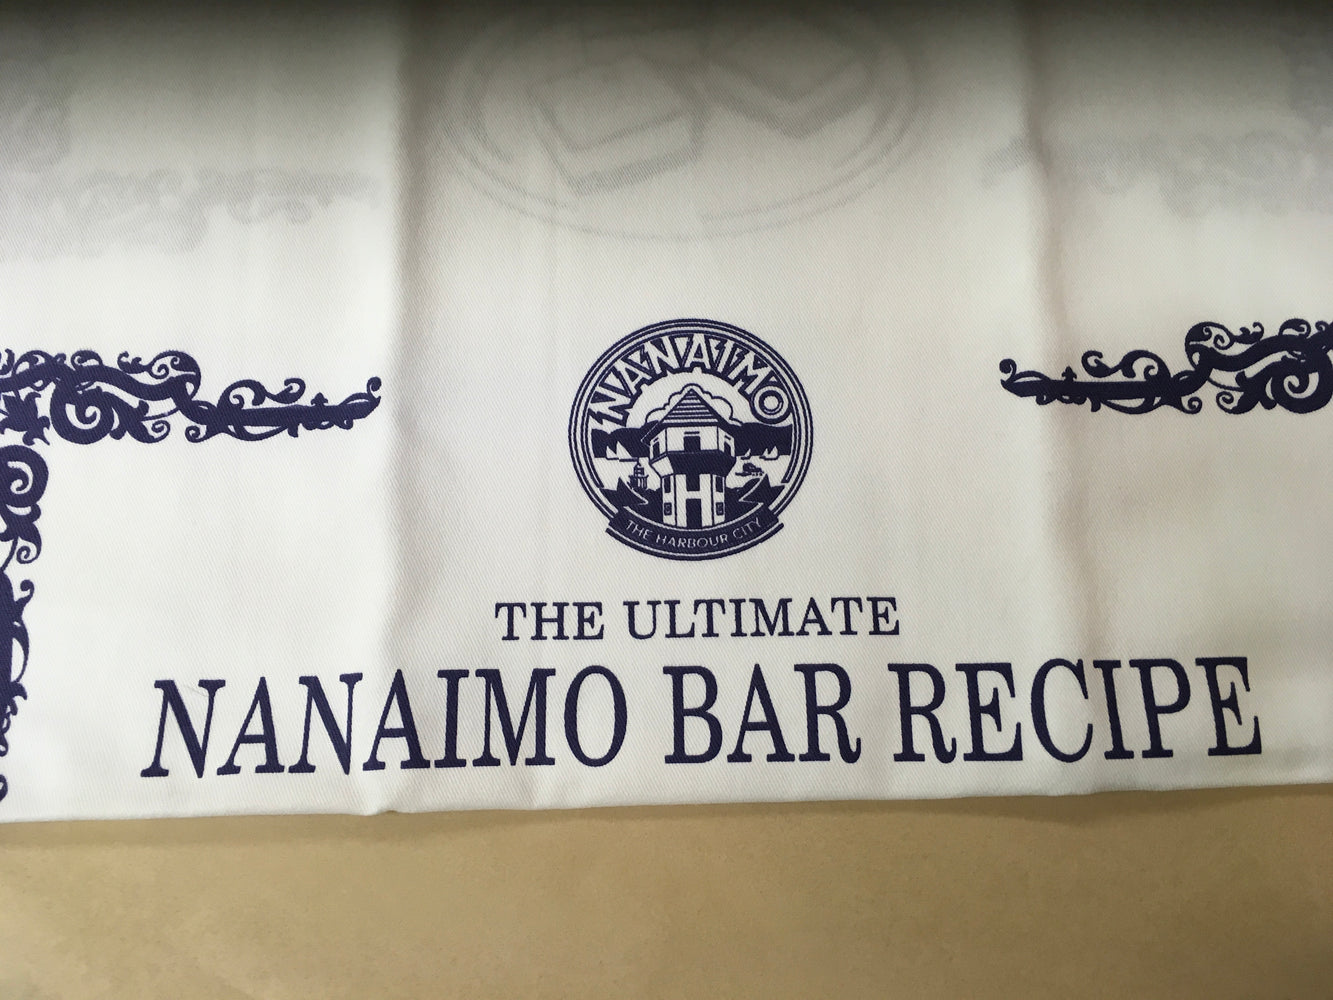 Nanaimo bar recipe tea towel